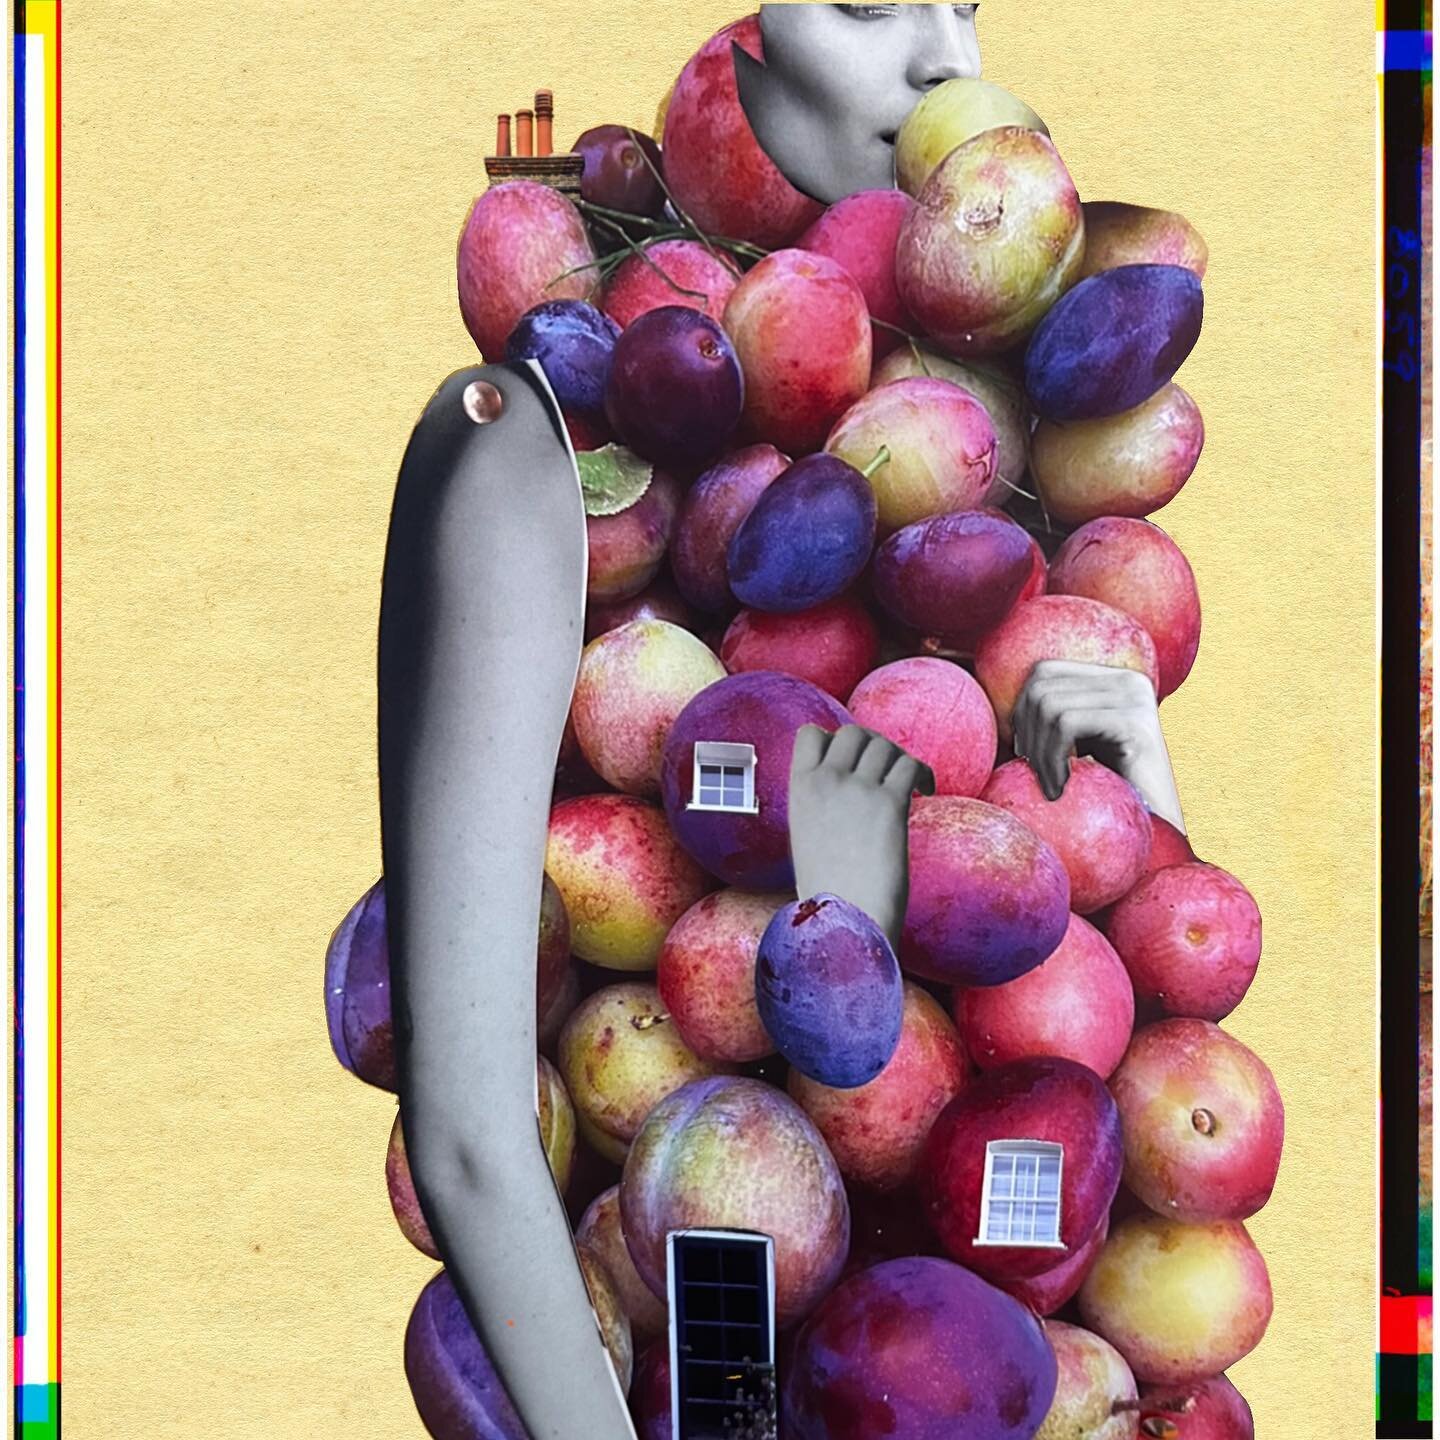 Ripe fruit 
-
Collage